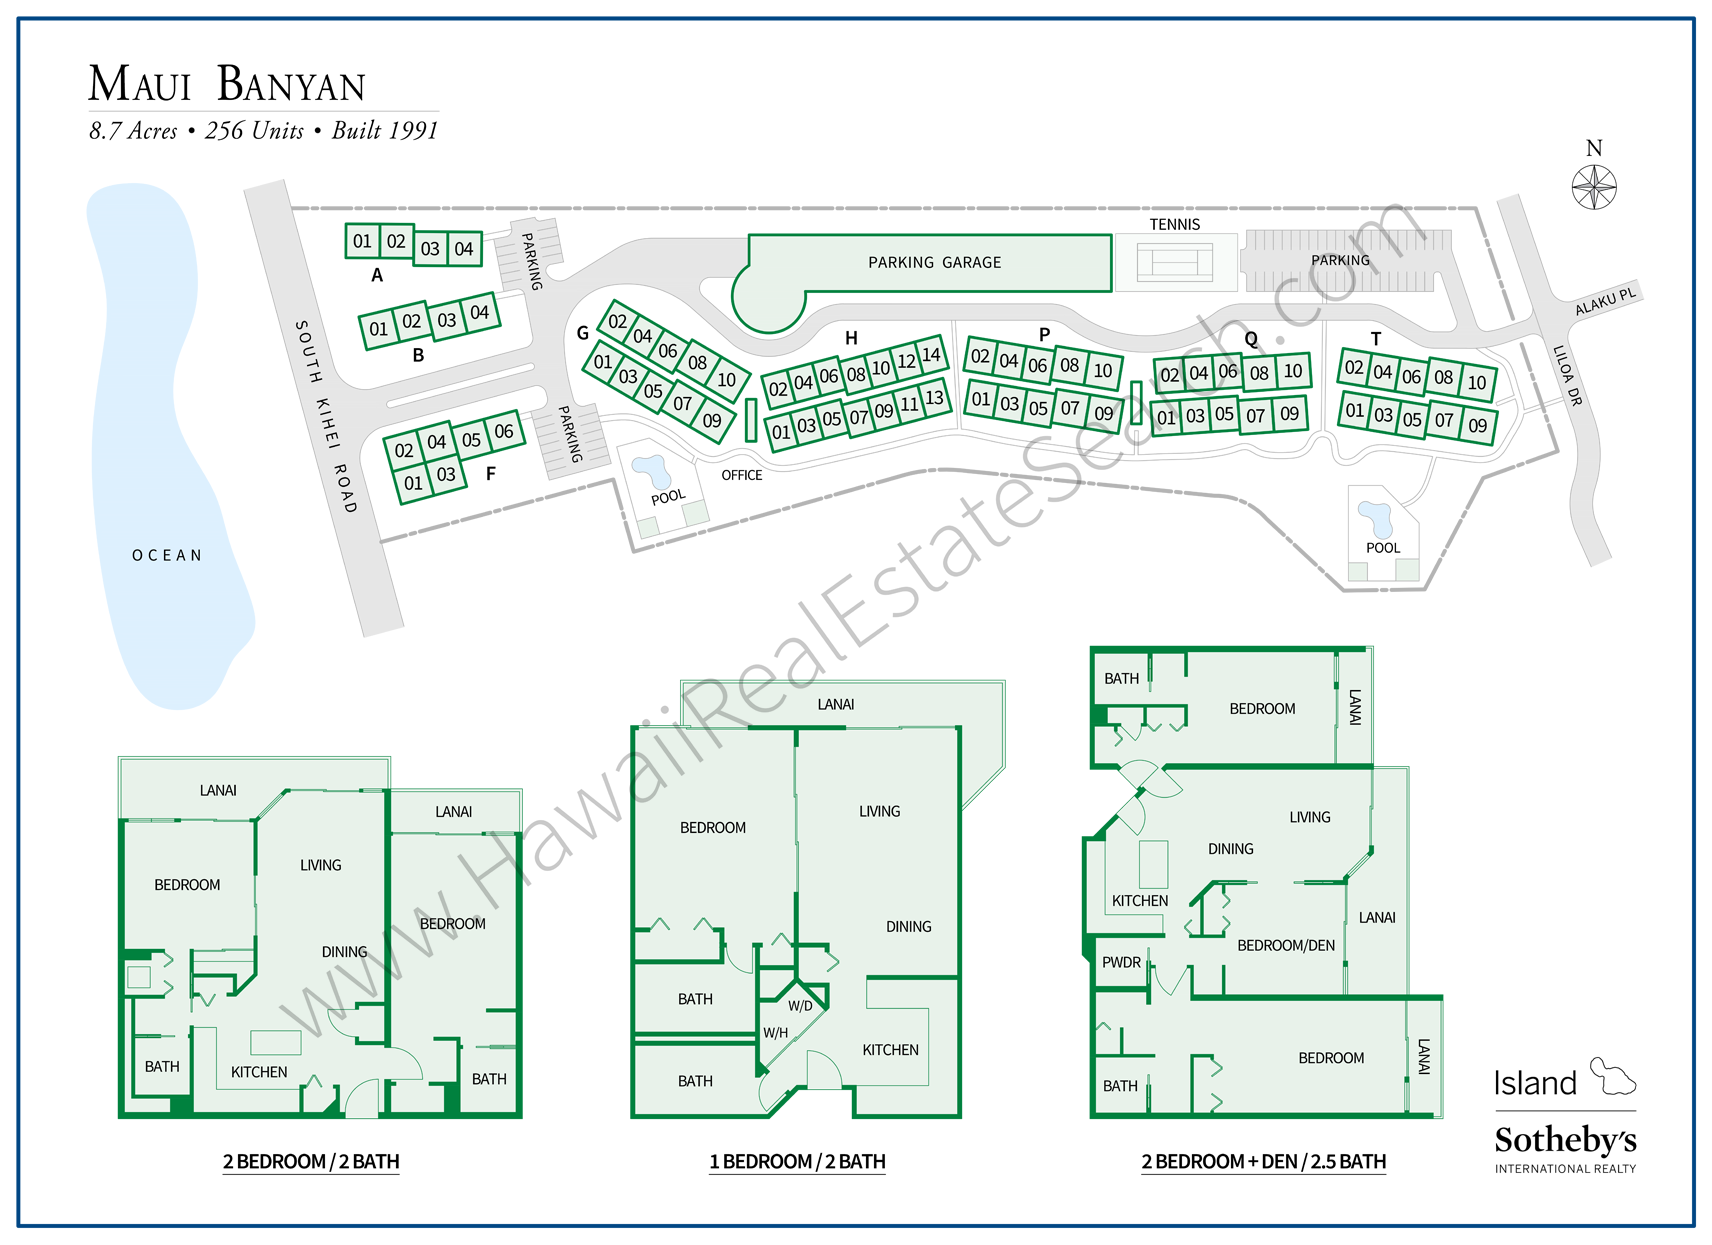 maui banyan map and floor plans 2018